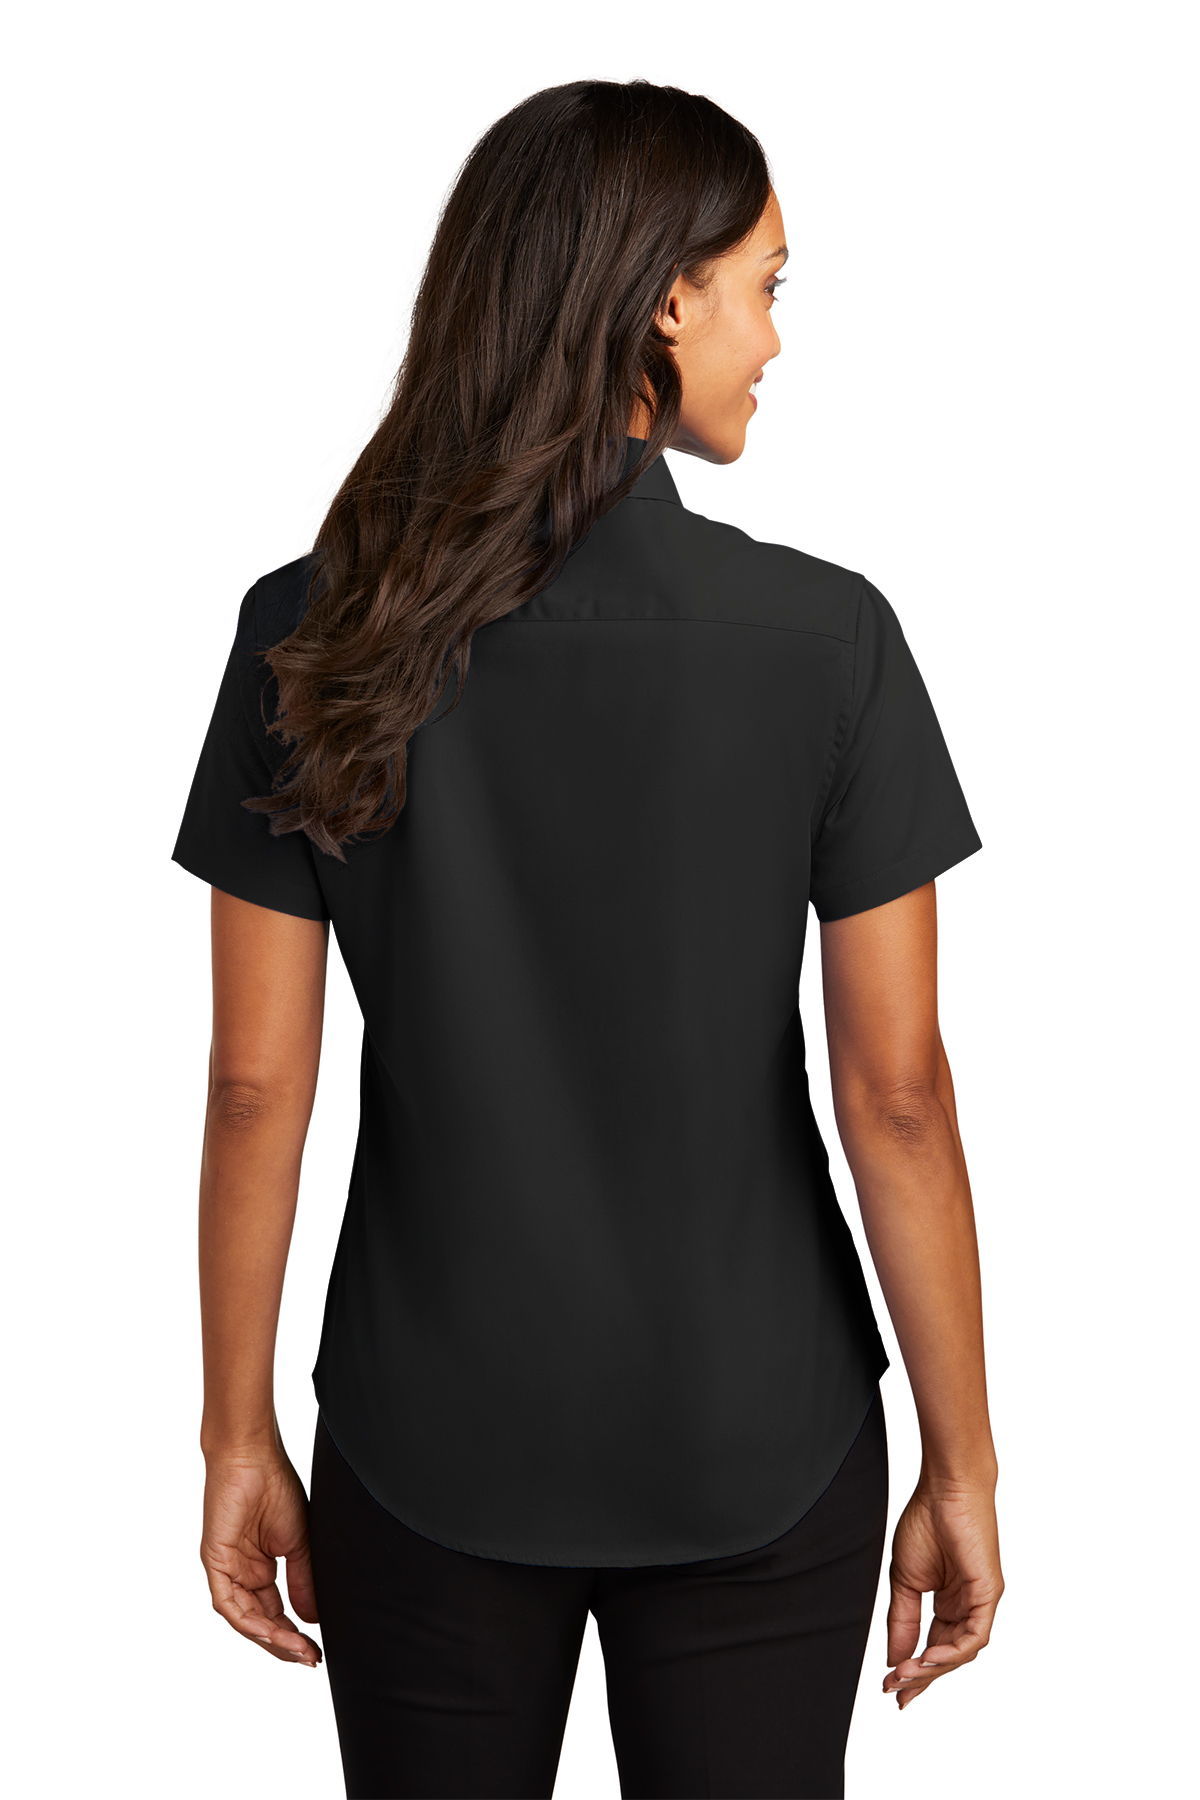 Port Authority Sleeve Authority Port | Short Ladies Product Care Easy Shirt 